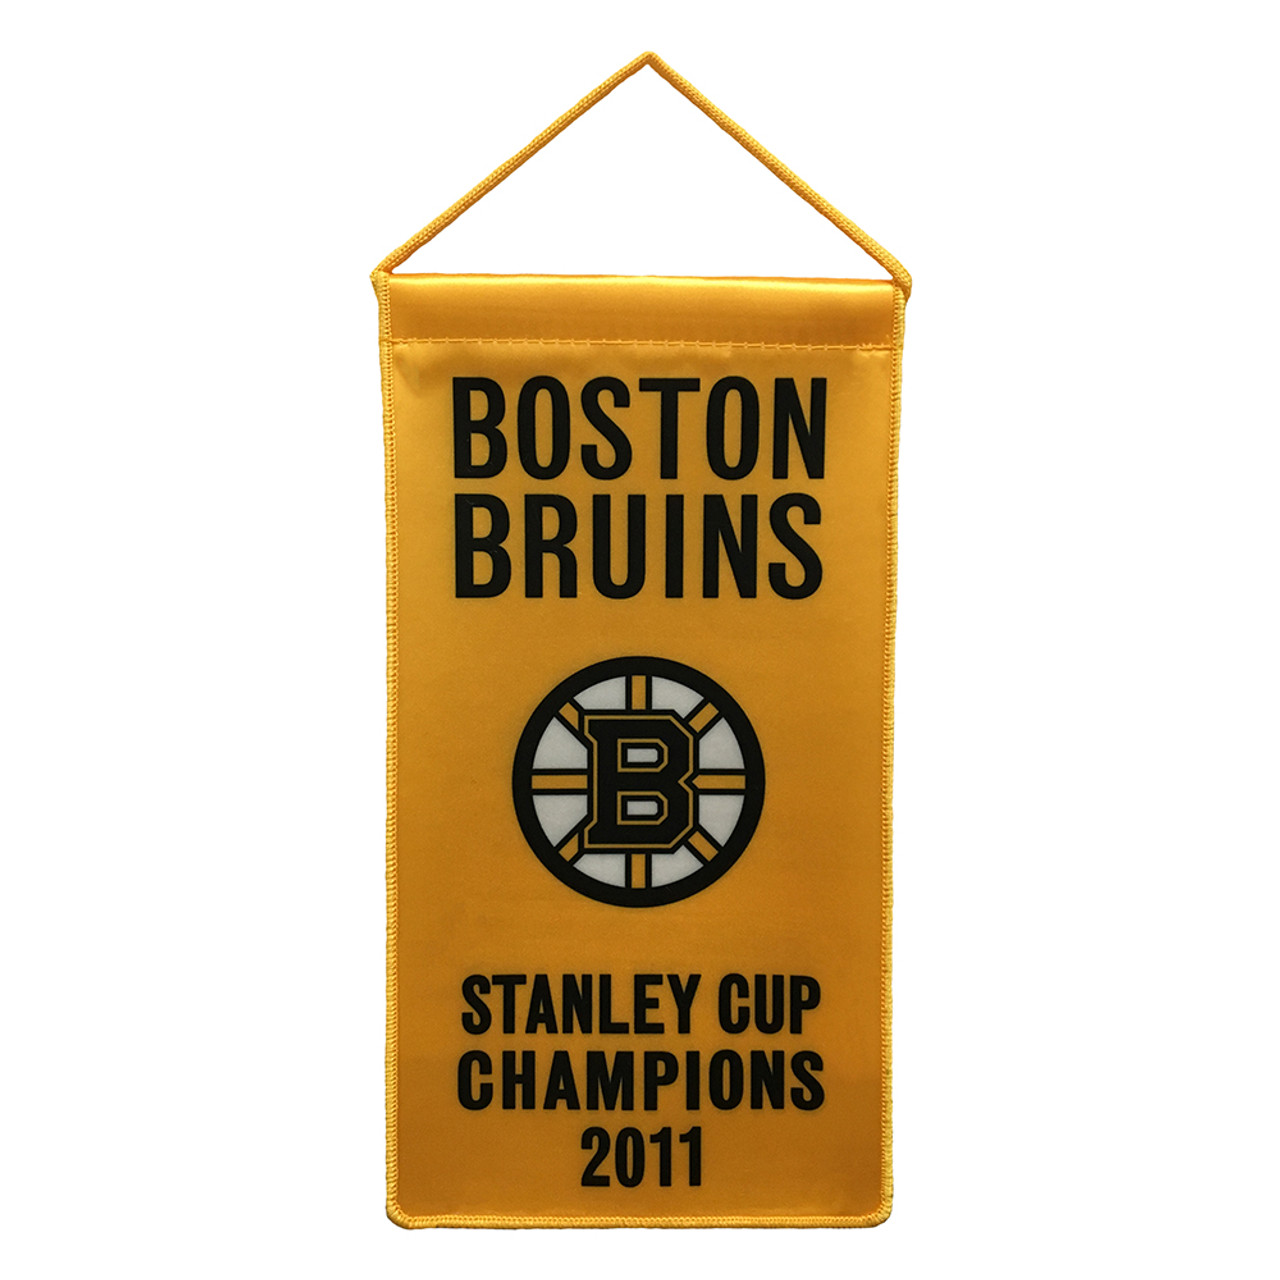 Boston Bruins 2011 Champions 10th Anniversary 18x24 Serigraph